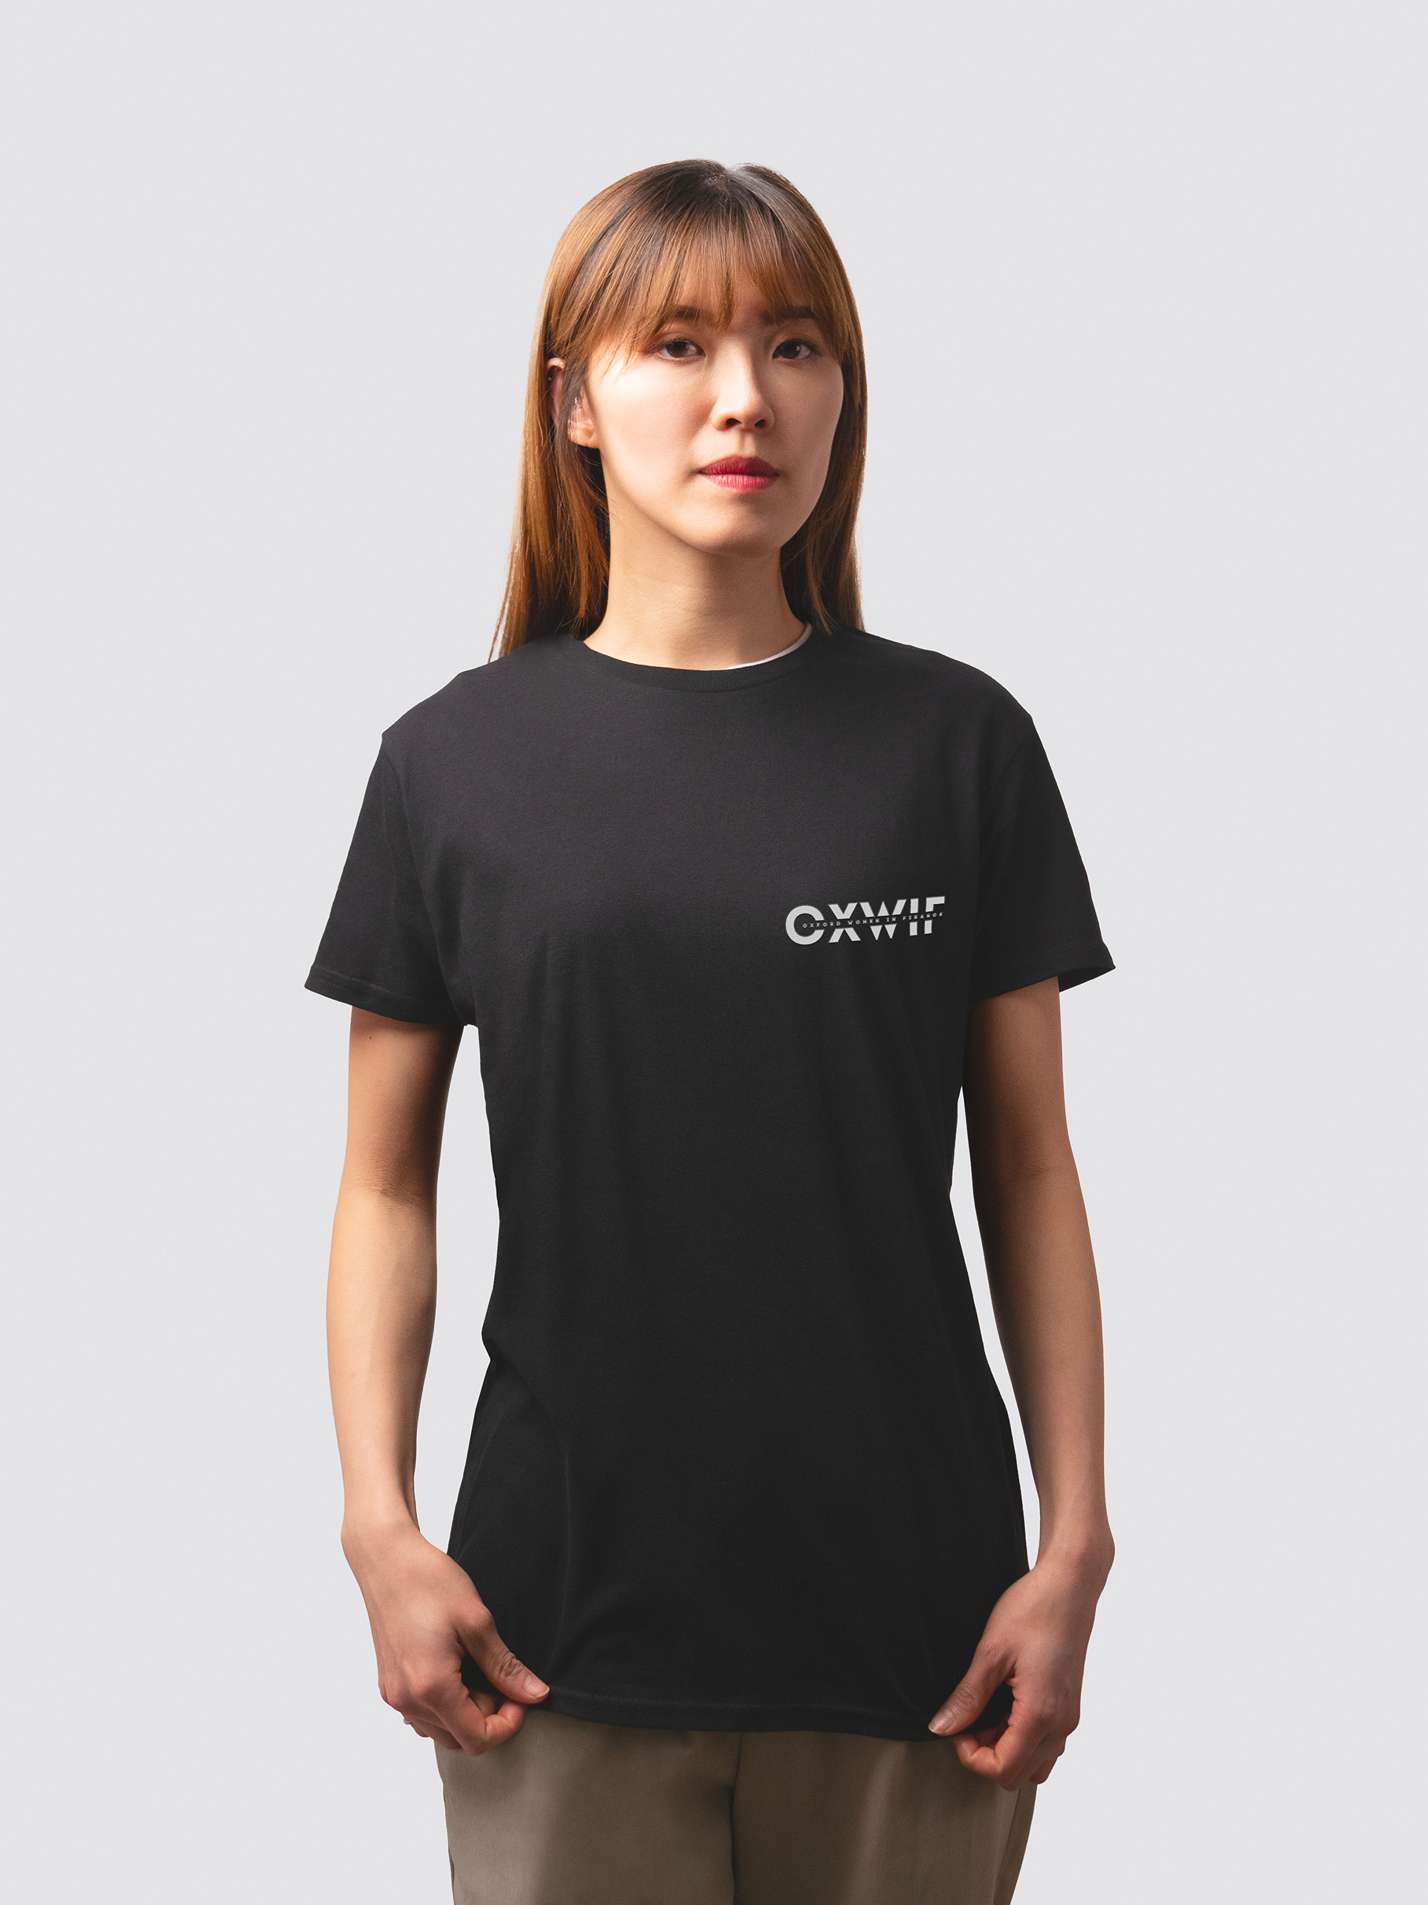 Oxford Women in Finance Organic Cotton T-Shirt